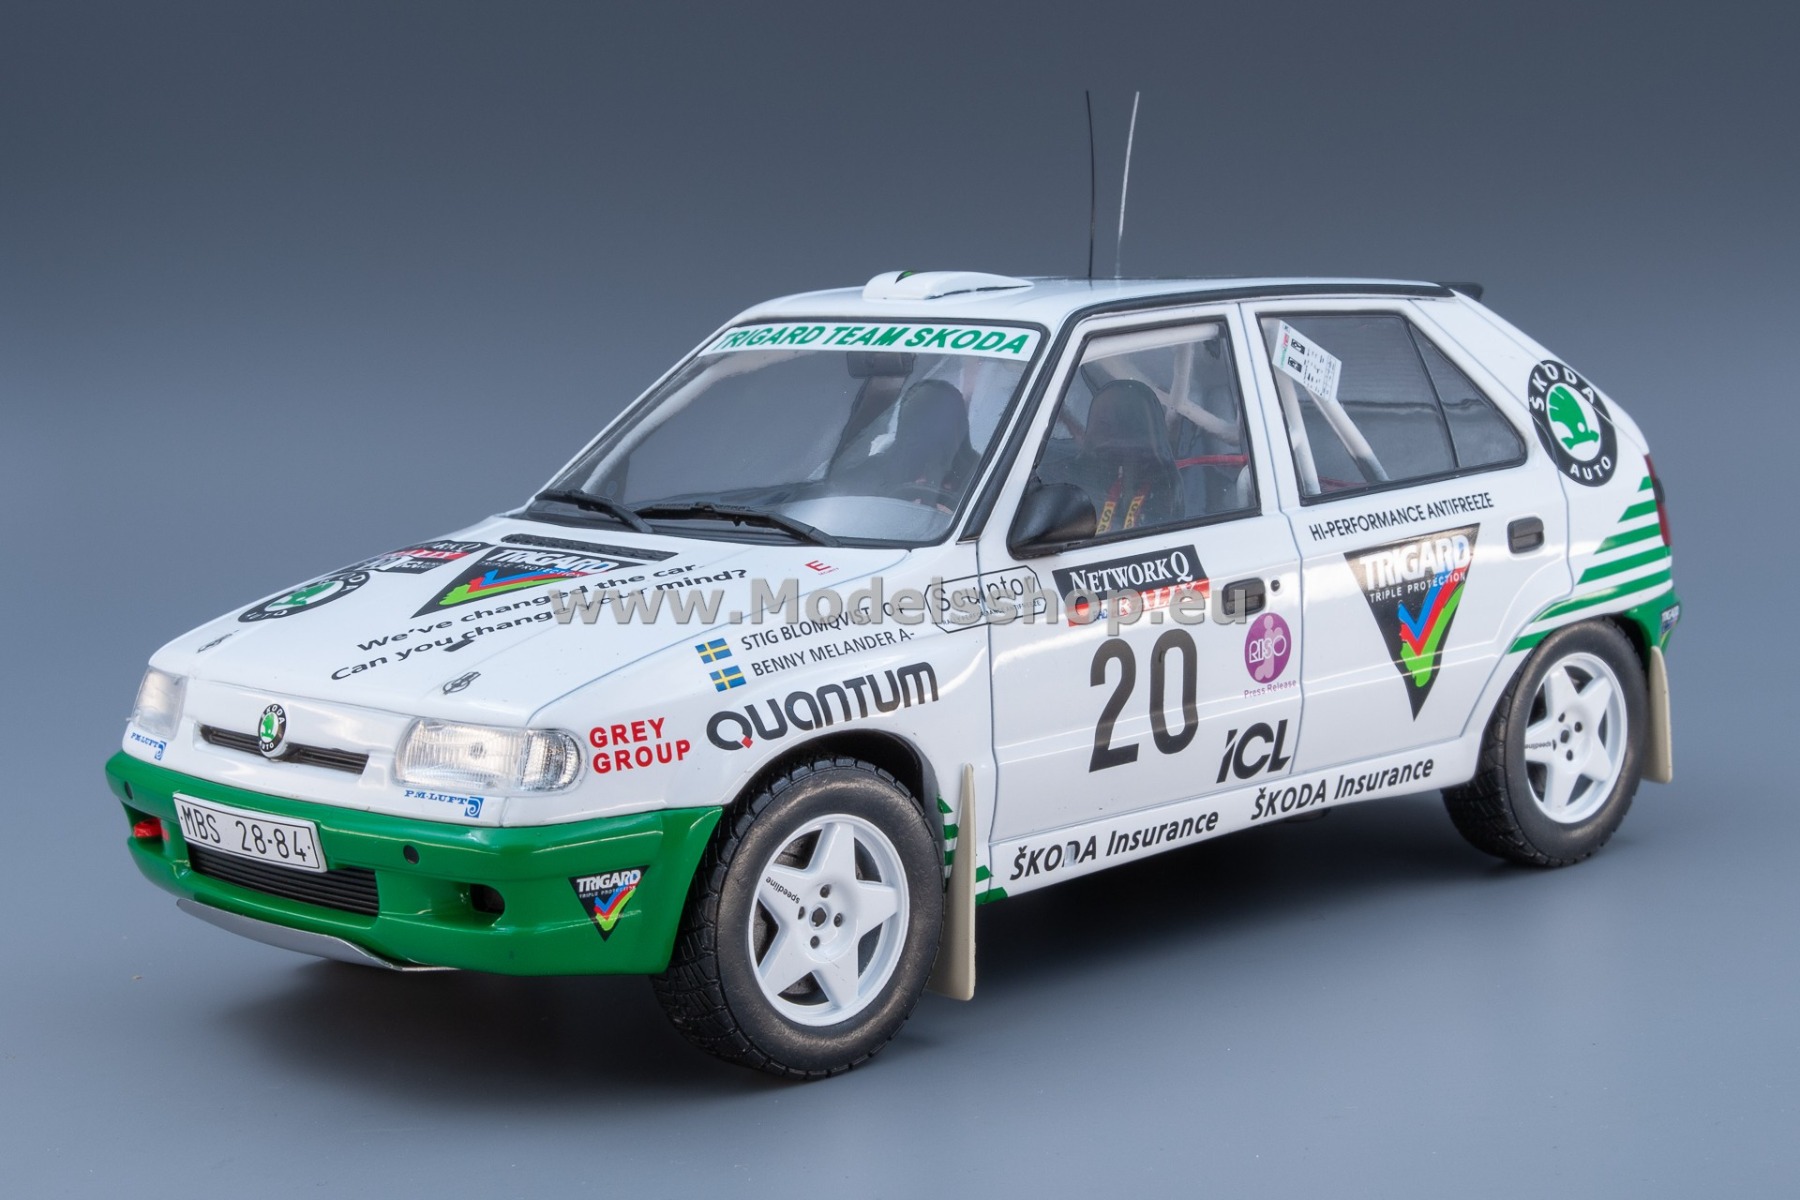 IXO18RMC147.22 Skoda Felicia Kit Car, No.20, Rallye WM, RAC Rally 1995, S.Blomqvist/B.Melander